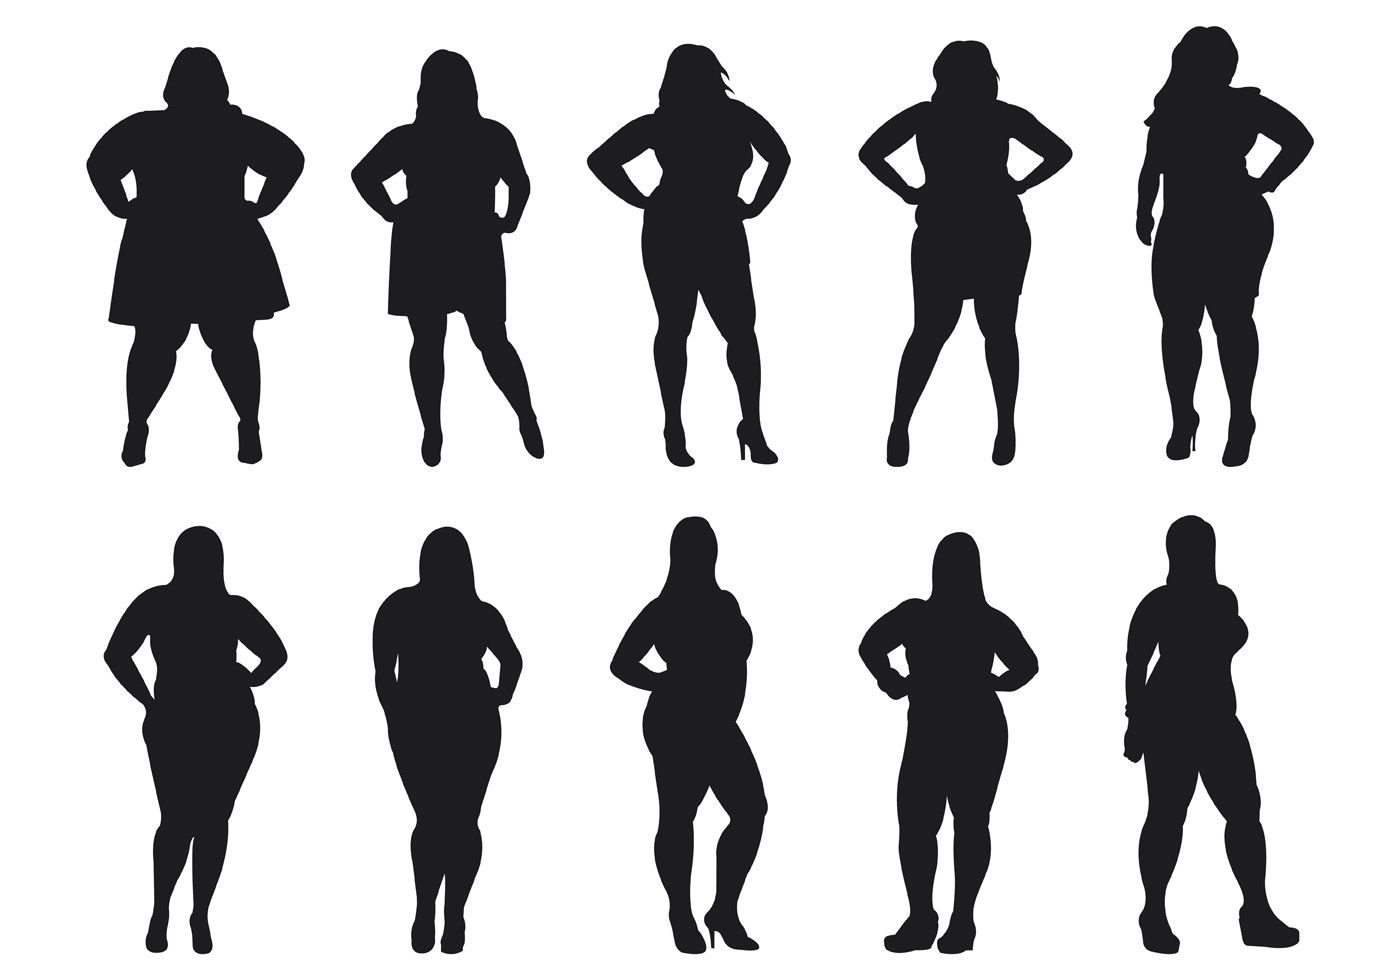 https://static.vecteezy.com/system/resources/previews/000/118/299/original/fat-women-silhouettes-vector.jpg